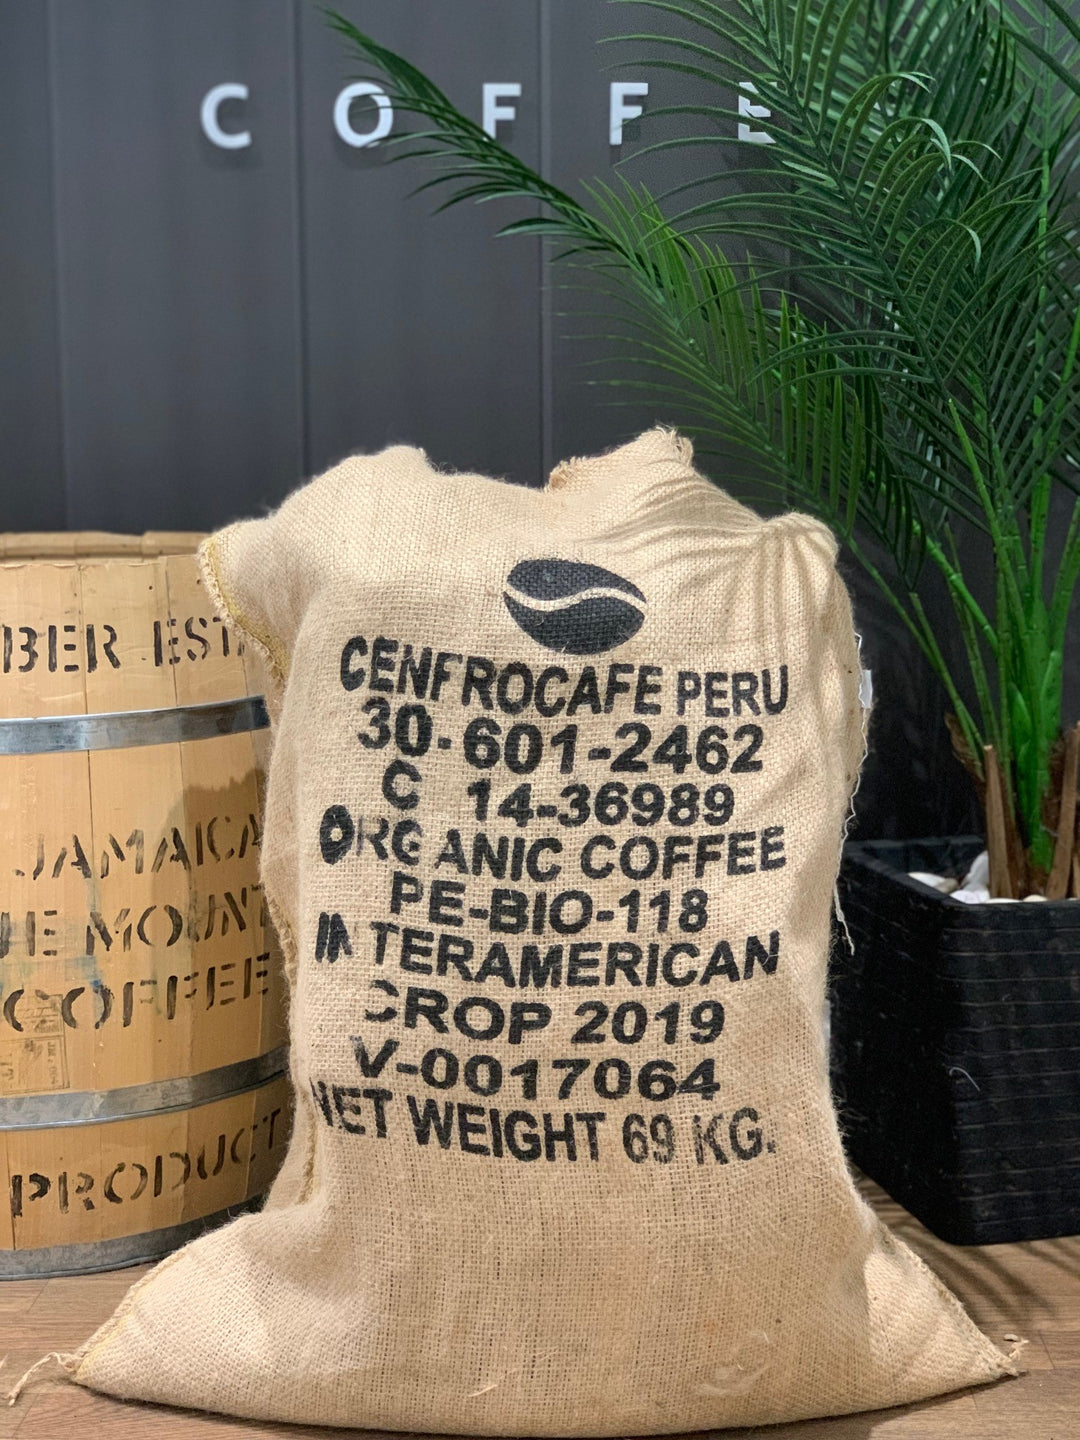 Peru coffee sacks